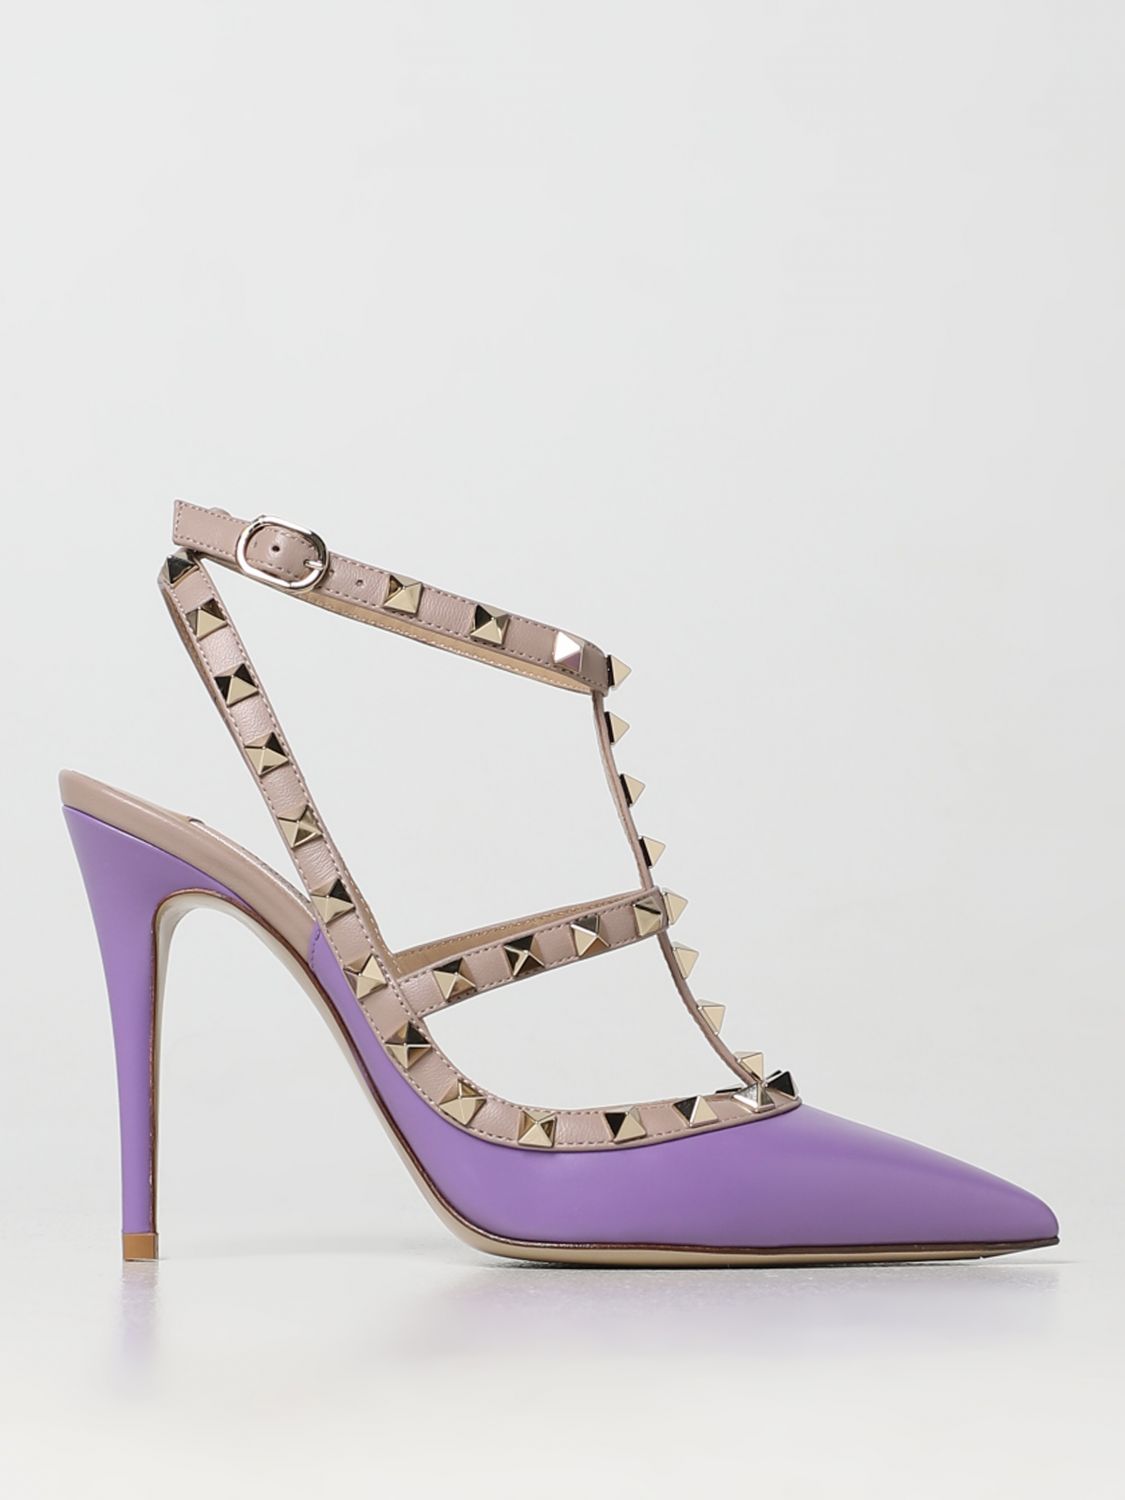 VALENTINO GARAVANI: high heel shoes for woman - Wisteria | Valentino Garavani high heel shoes 2W2S0393VOD online on